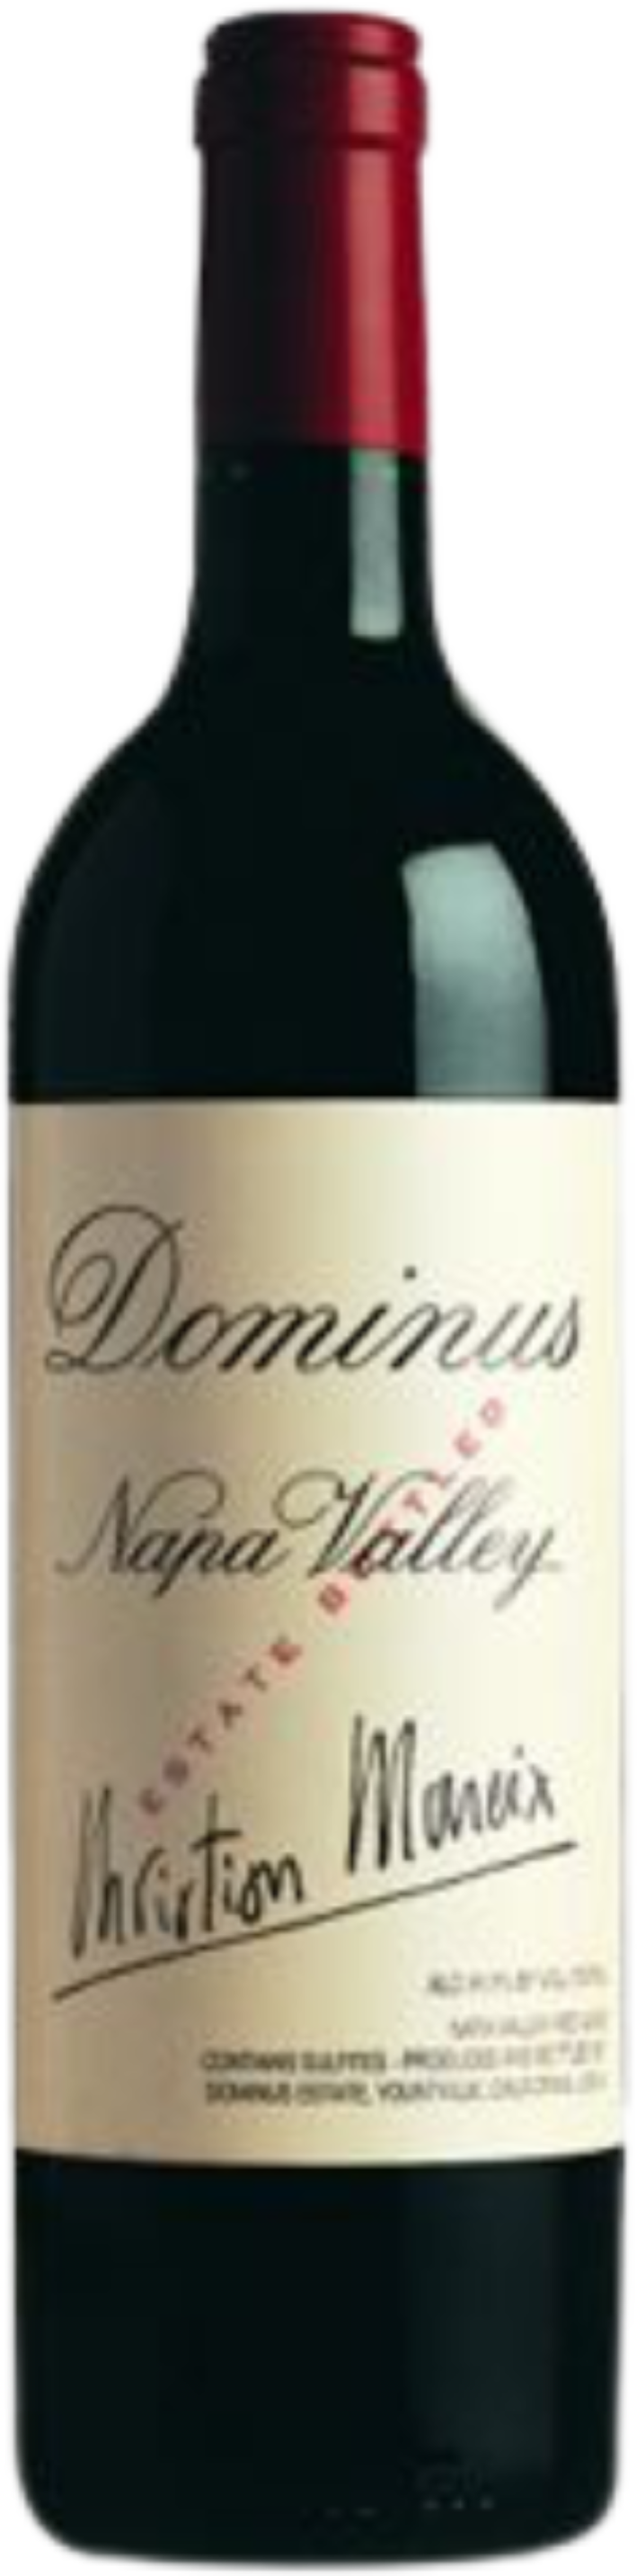 2008 Dominus Estate Napa Valley